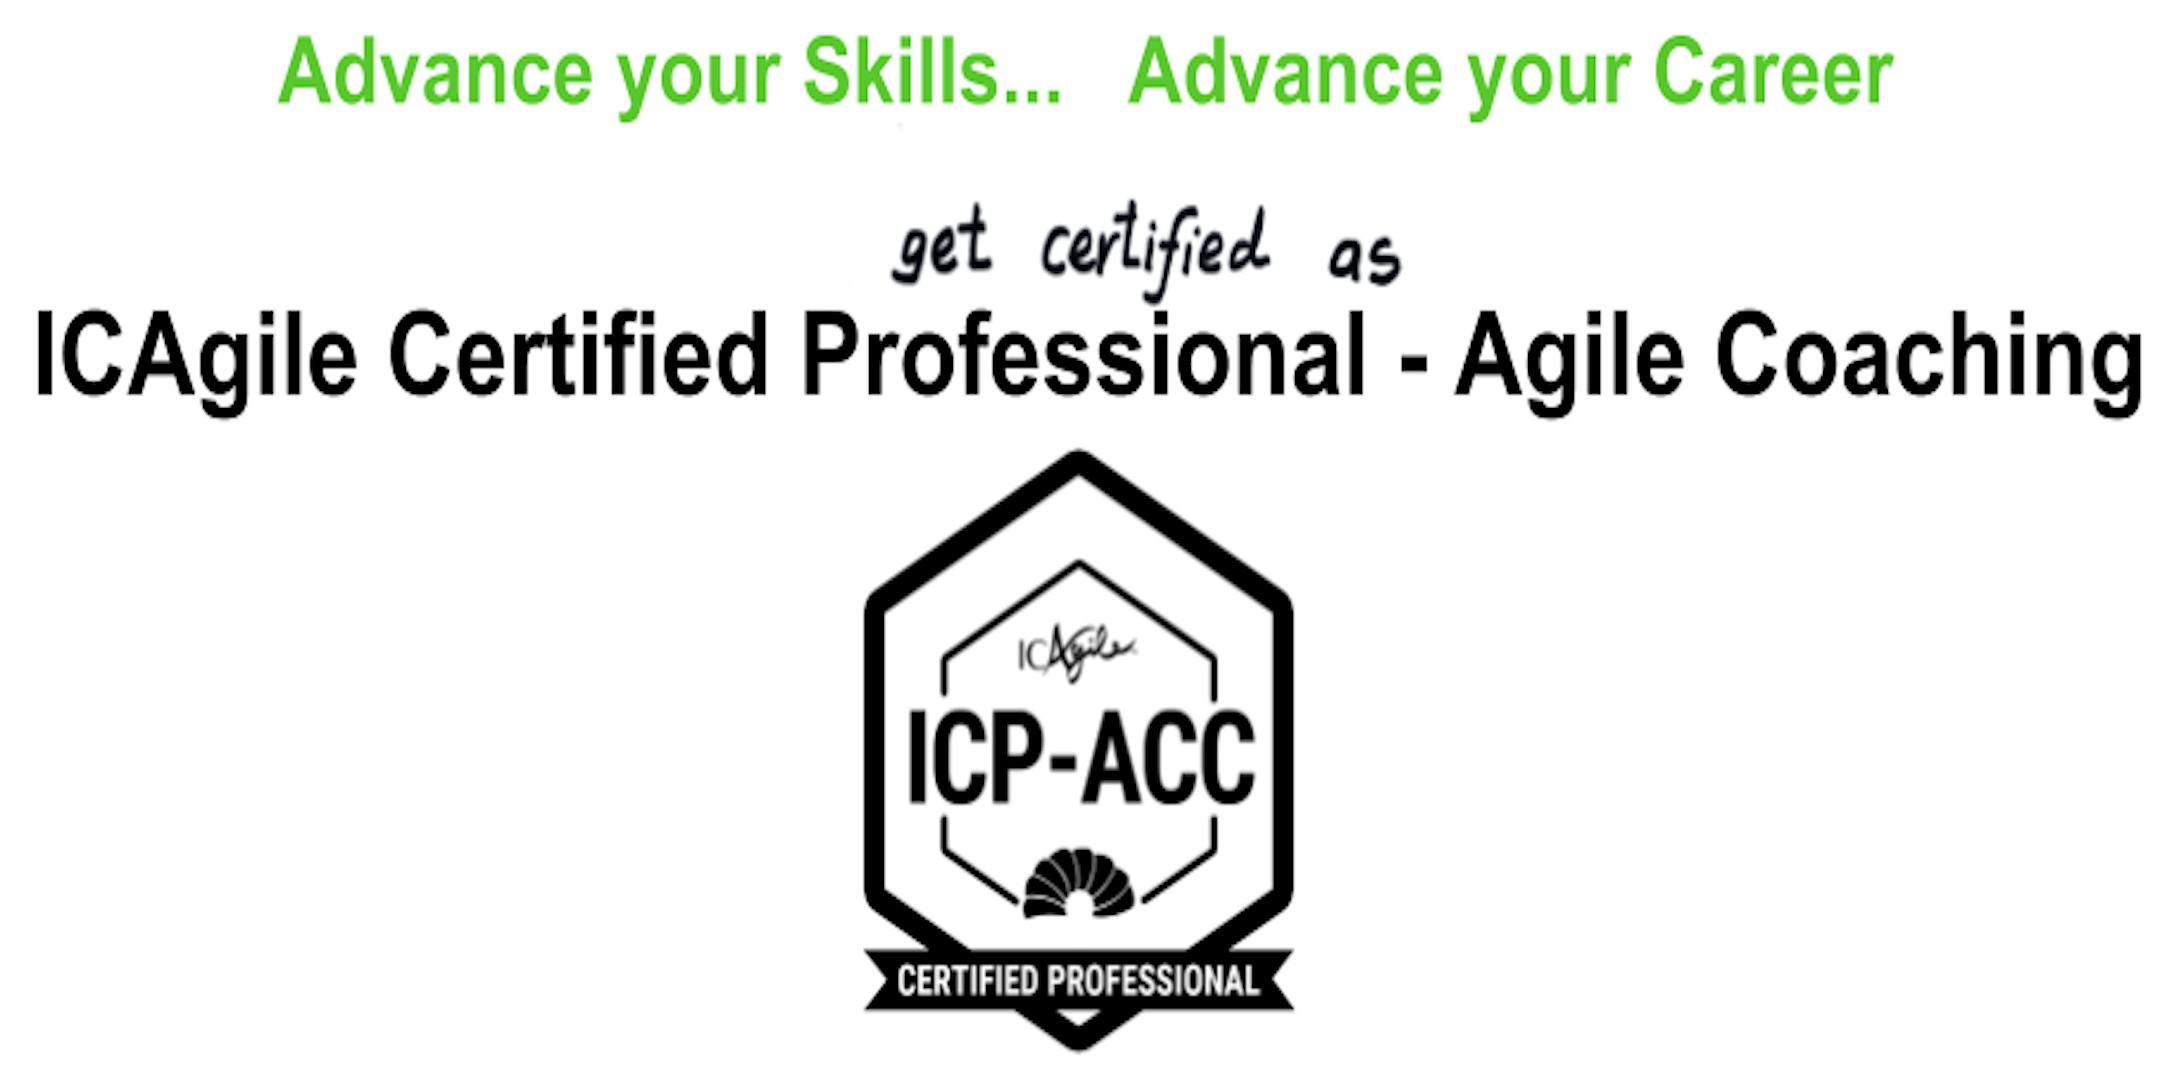 ICAgile Certified Professional - Agile Coaching (ICP ACC) Workshop - Raleigh NC - Guaranteed to Run